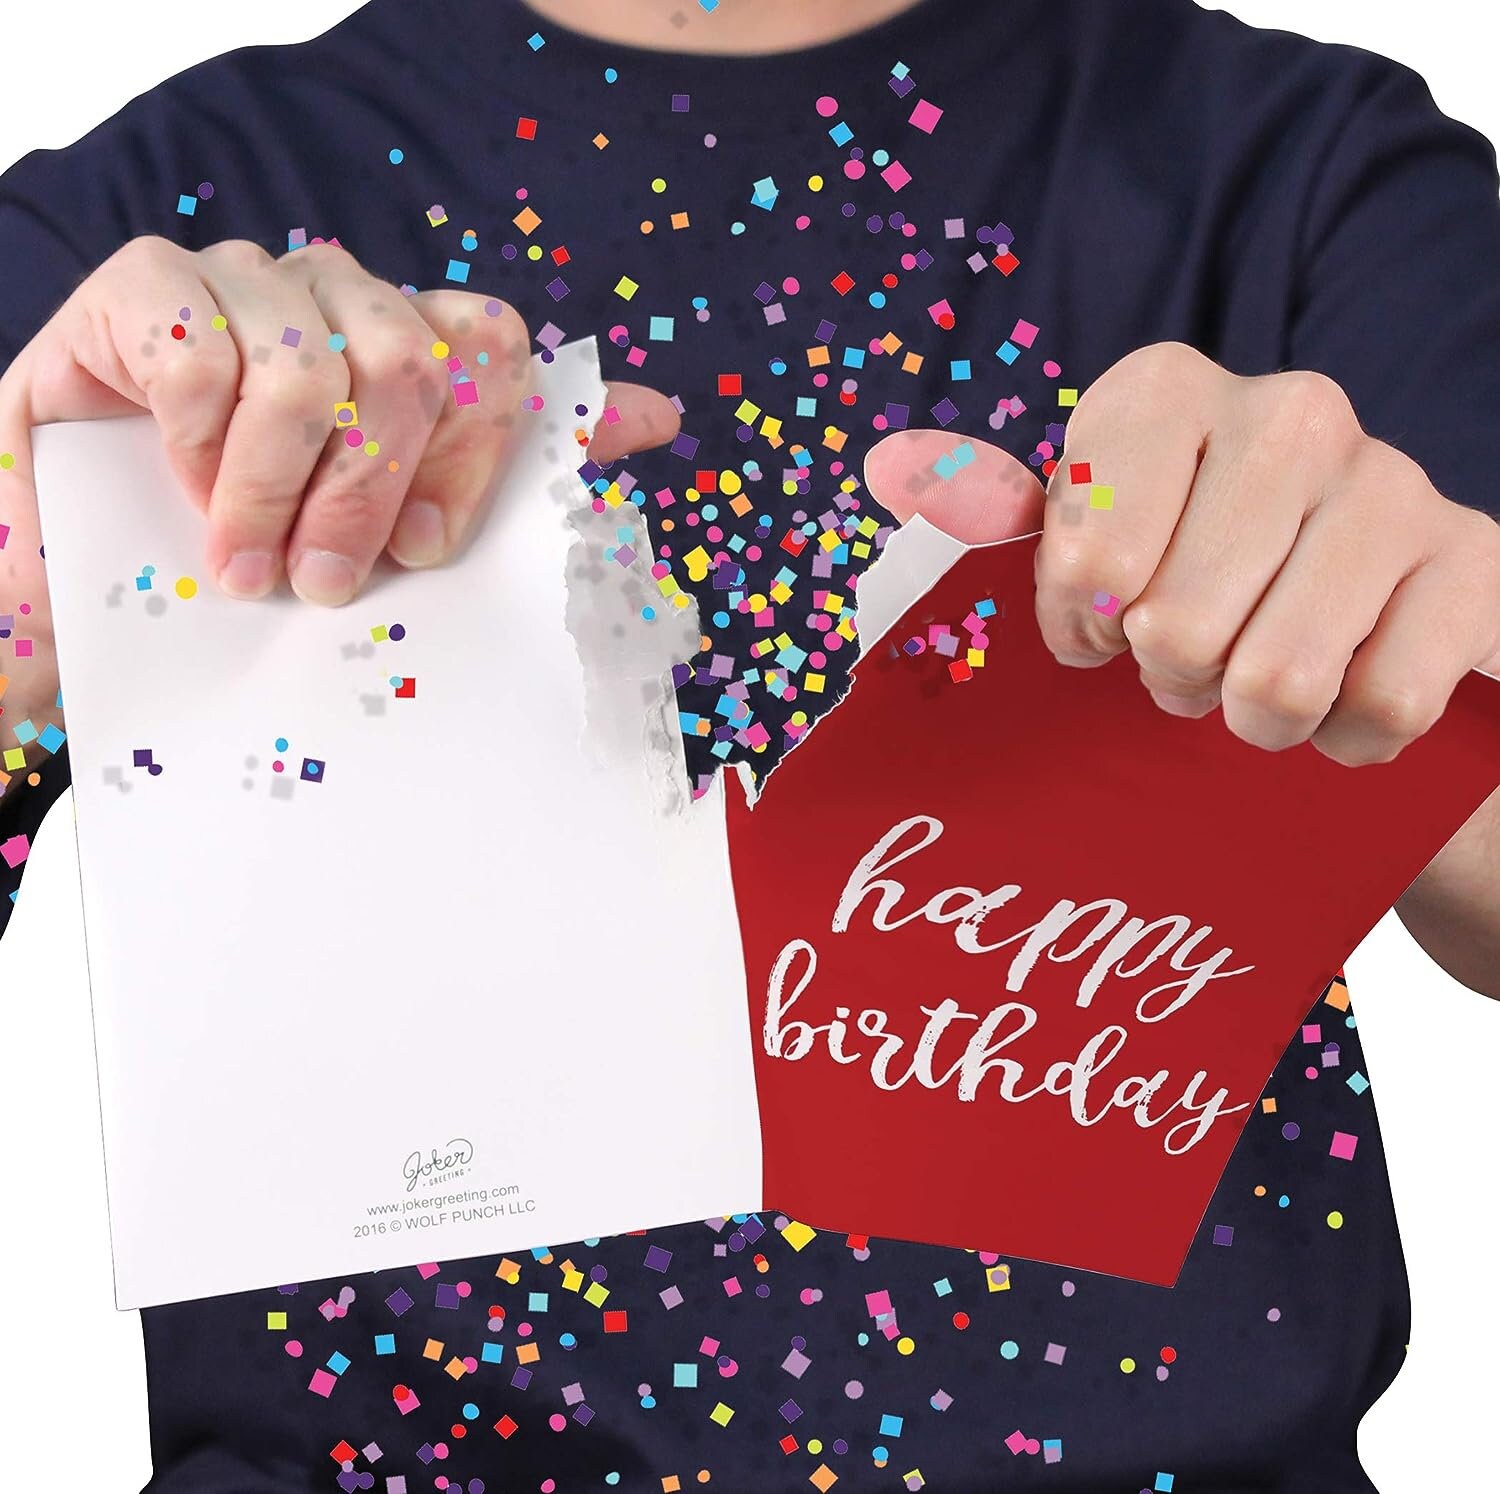 Bio-Glitter Trap Red Envelope (3-pack) by Joker Greeting